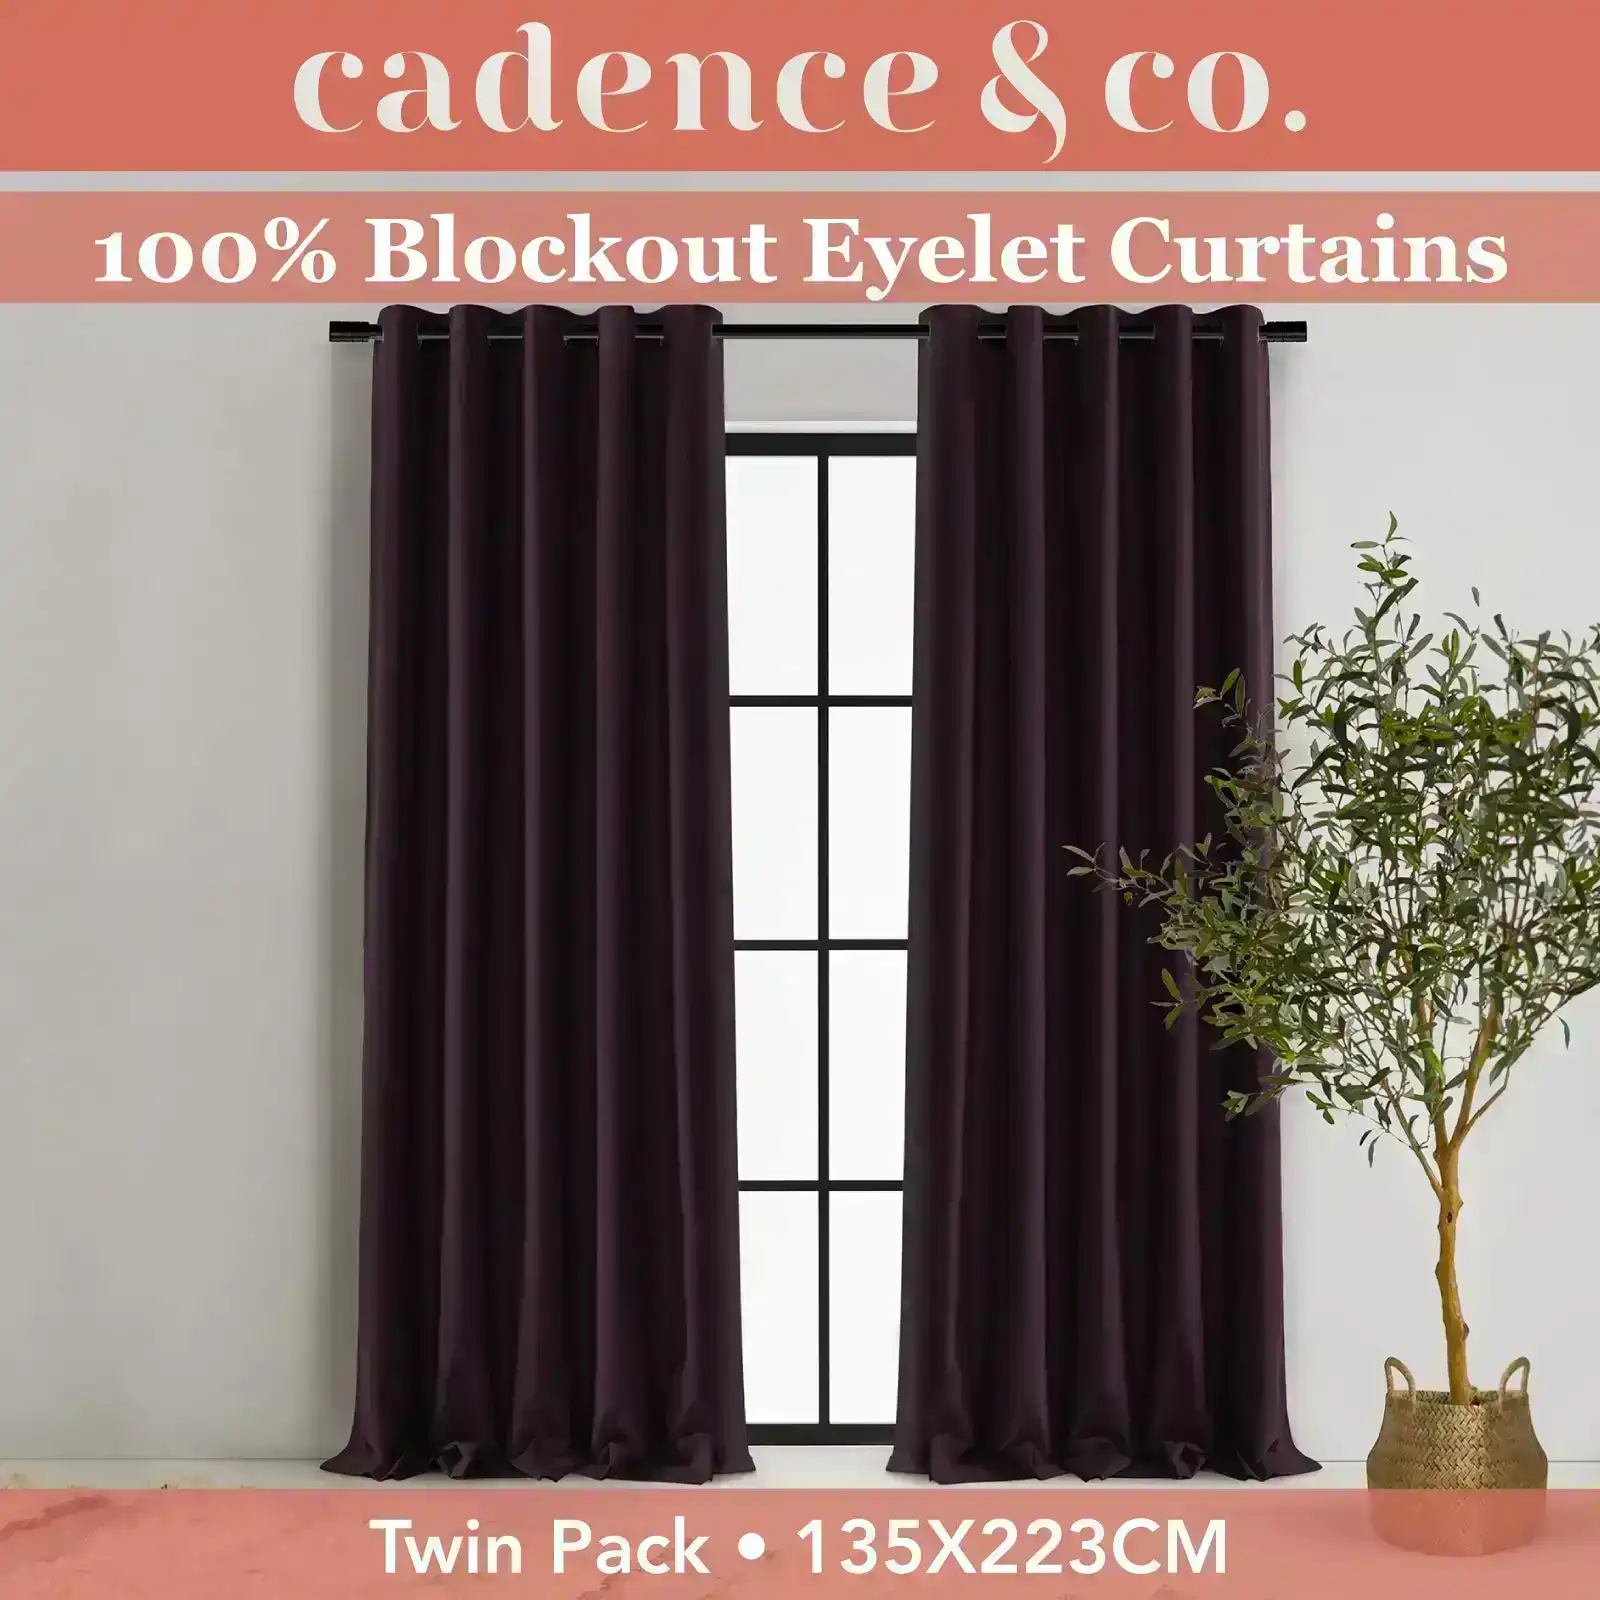 Cadence & Co Byron Matte Velvet 100% Blockout Eyelet Curtains Twin Pack Aubergine 135x223cm